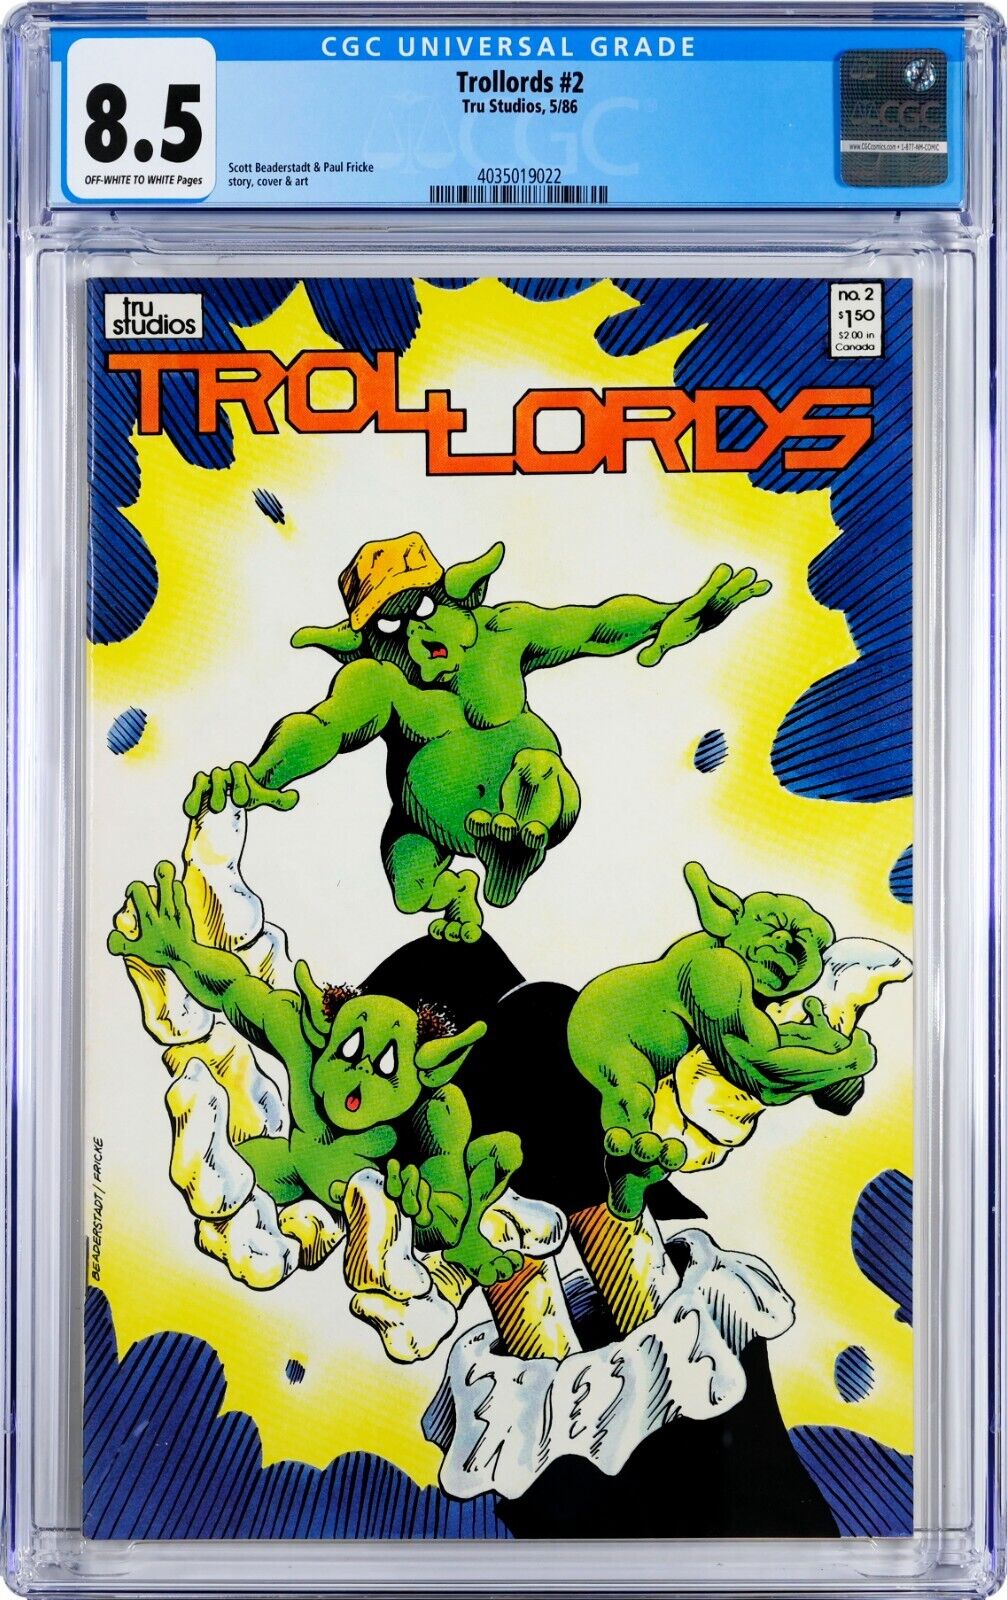 Trollords #2 CGC 8.5 (May 1986, Tru Studios) Scott Beaderstadt & Paul Fricke